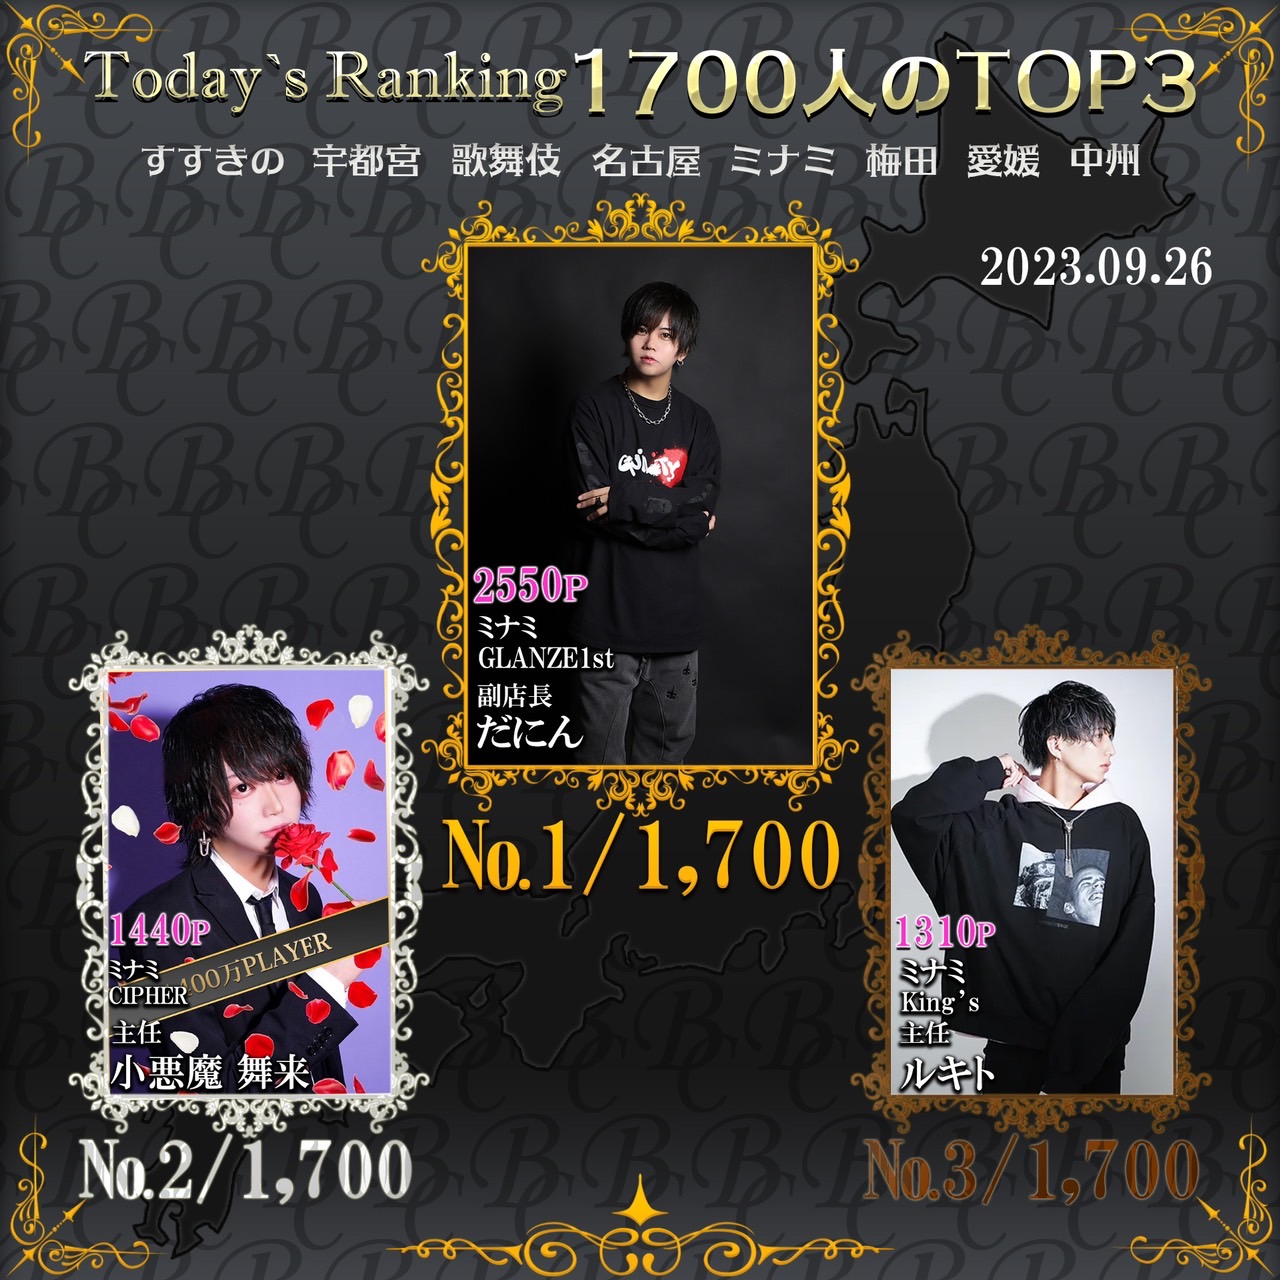 9/26 Today’s Ranking